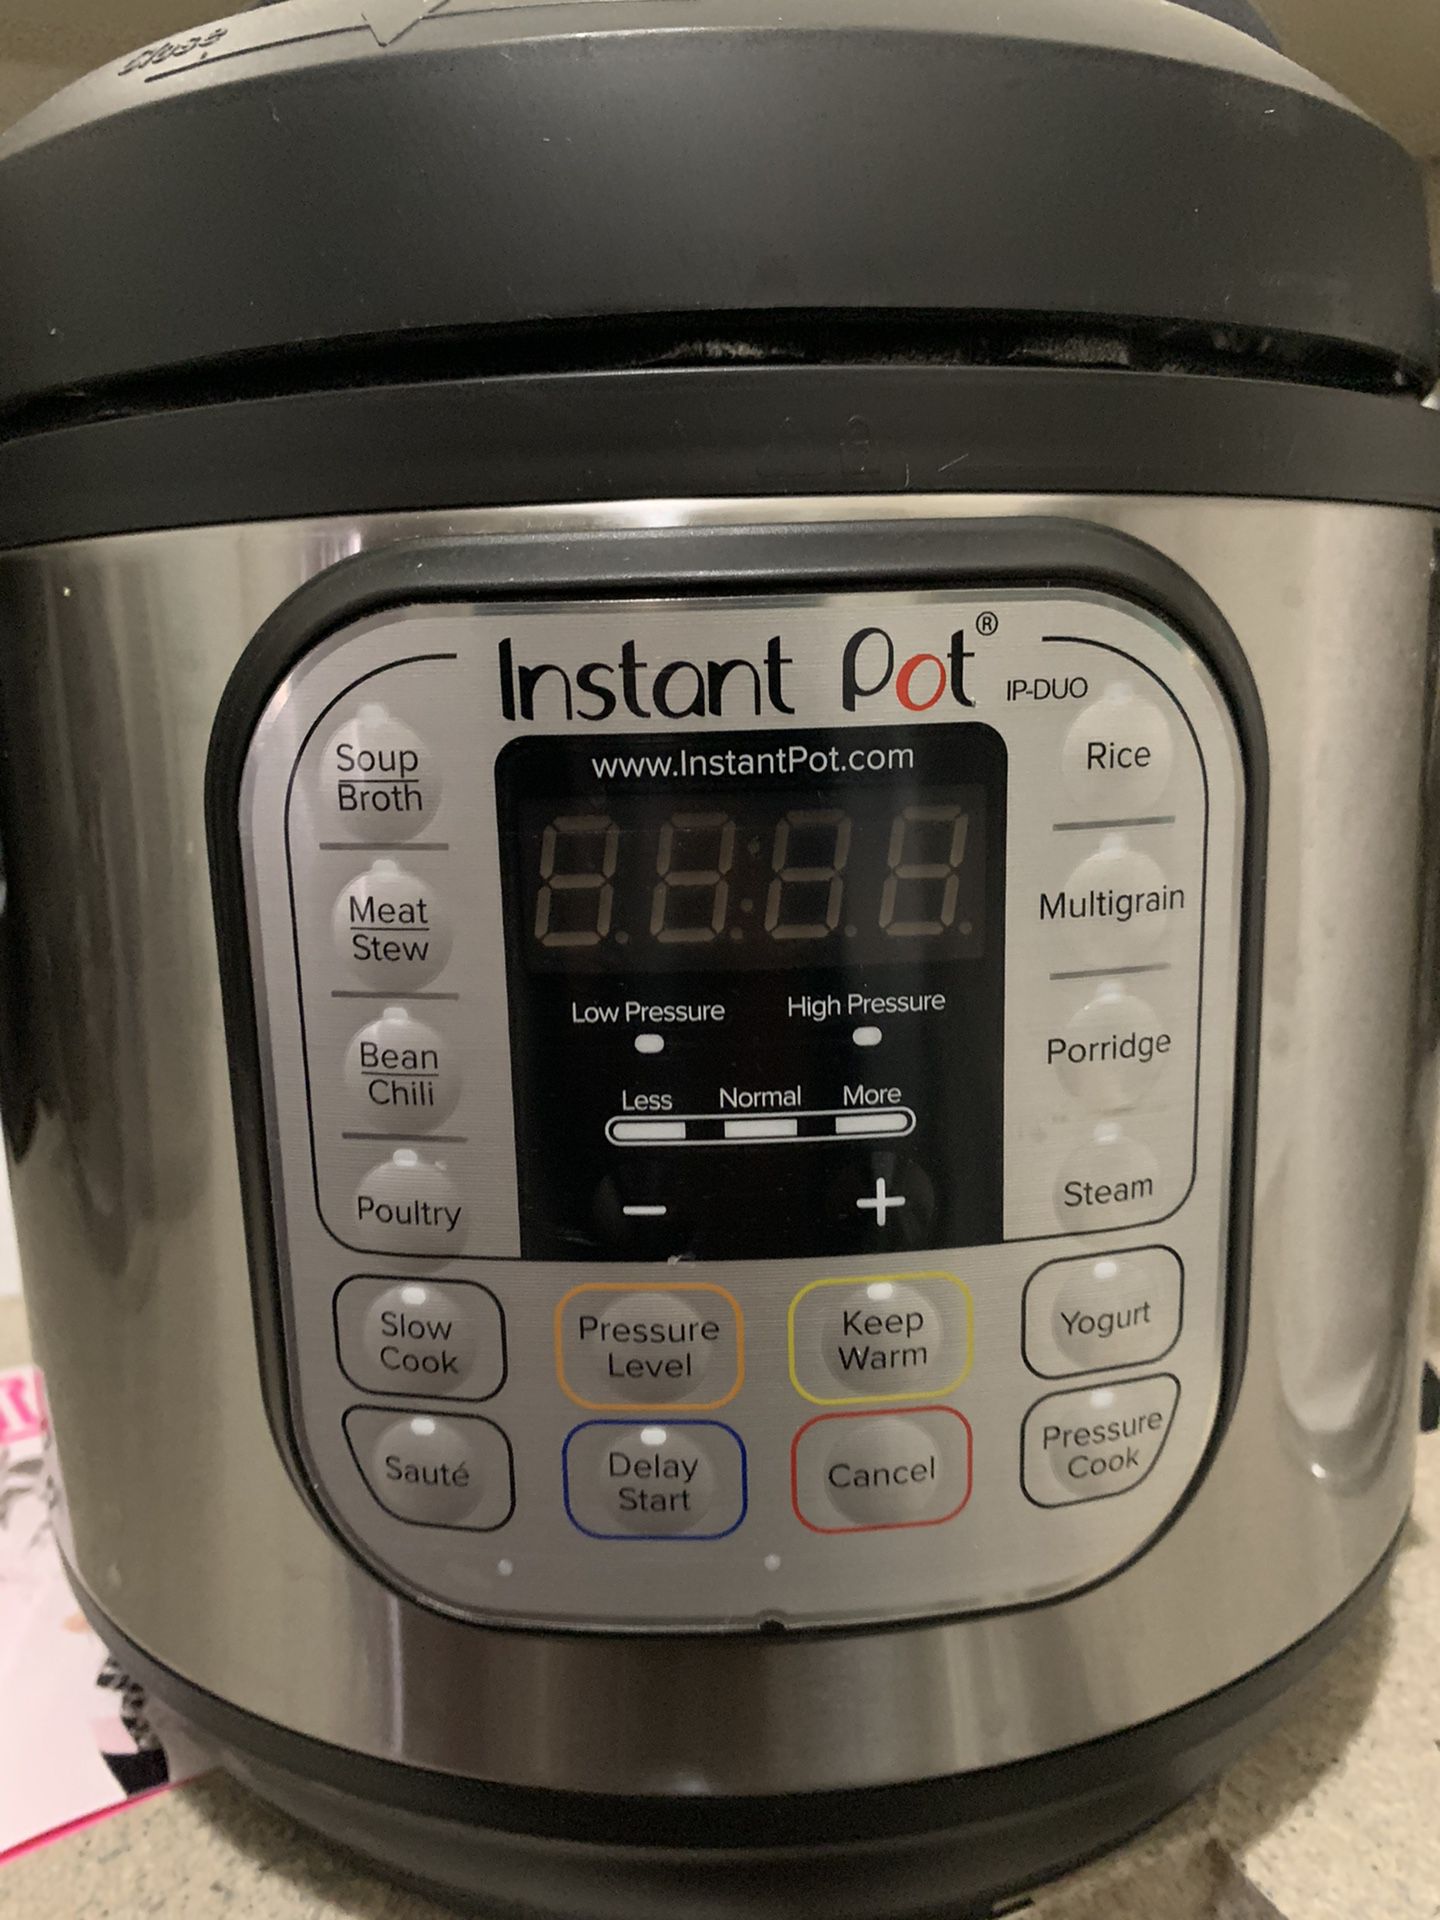 Instant Pot cooker